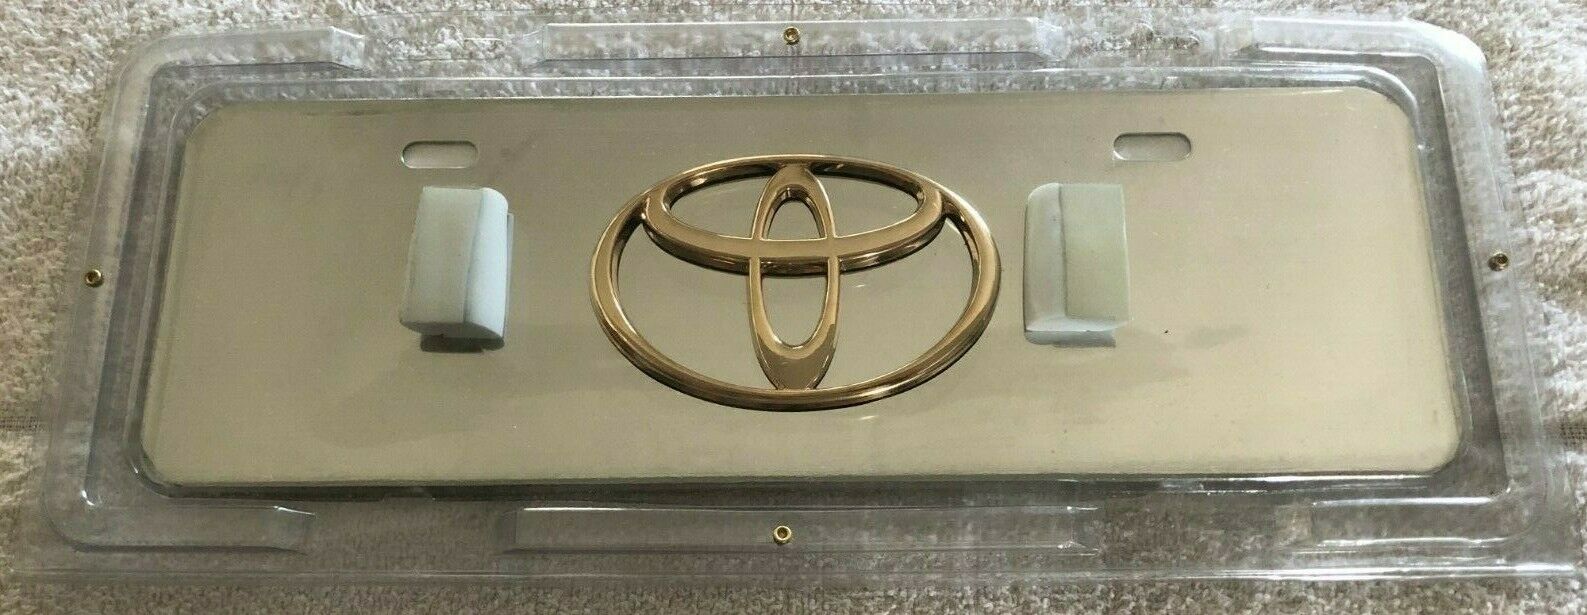 Pilot TOYOTA Gold Emblem License Plate Mini 3-D